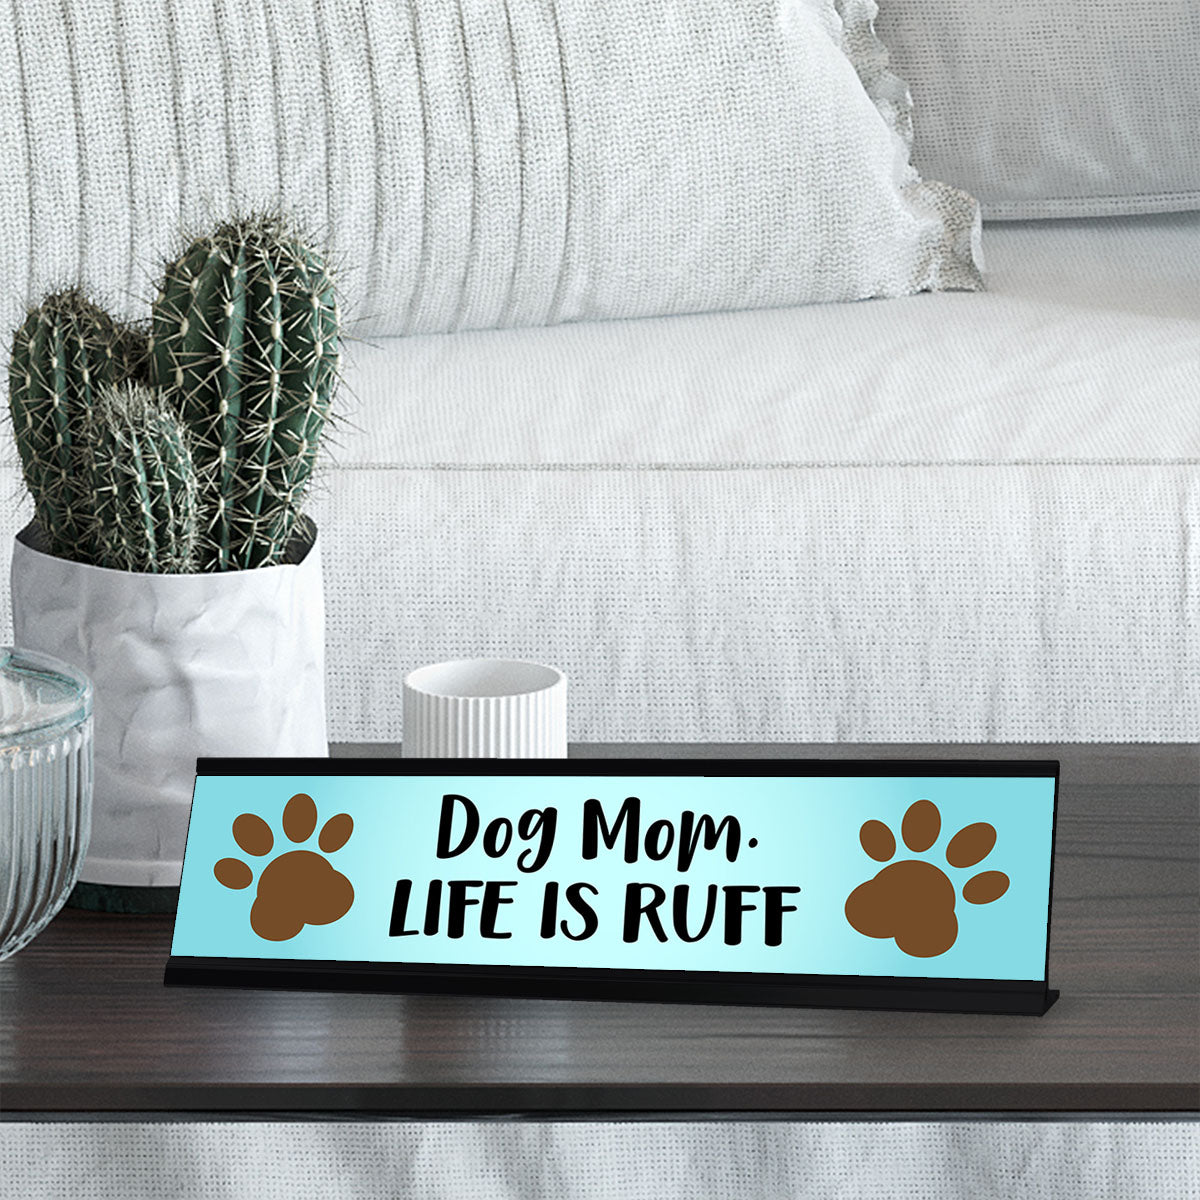 Dog Mom Life is Ruff, Aqua Colored Designer Desk Sign Nameplate (2 x 8")